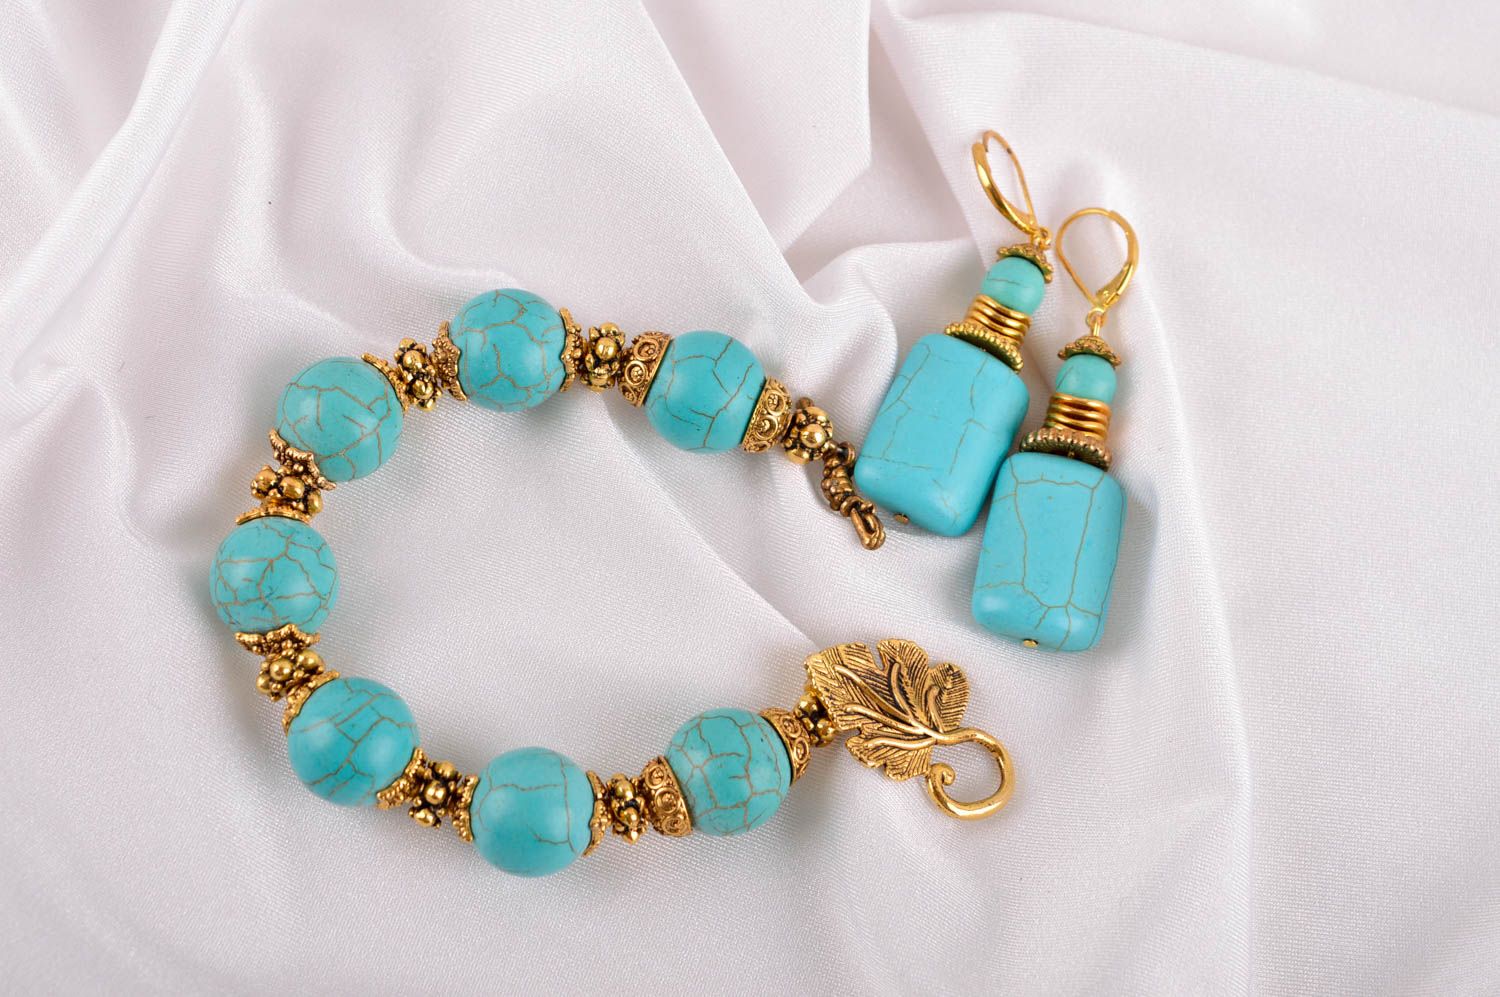 Handmade gemstone jewelry set wrist bracelet turquoise dangling earrings photo 1